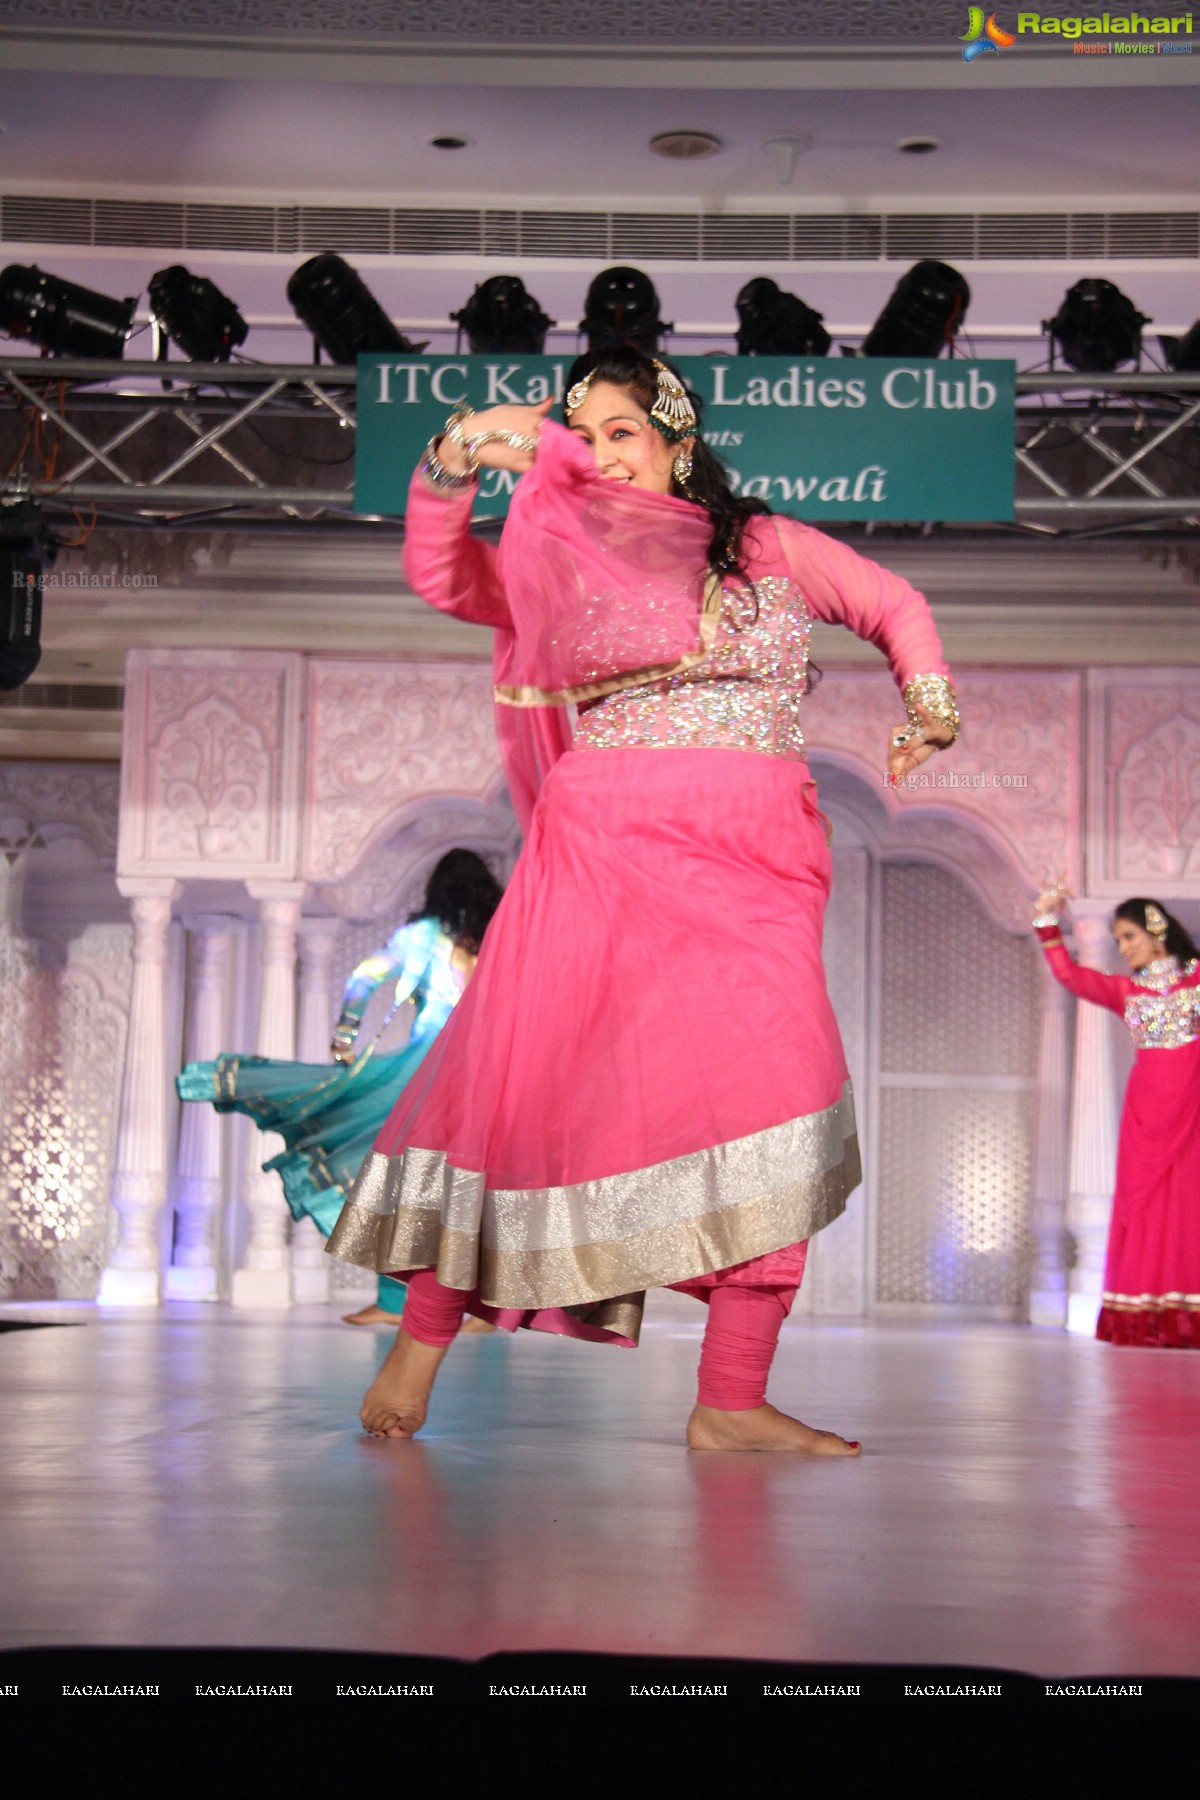 Kakatiya Ladies Club Anniversary Celebrations 2014